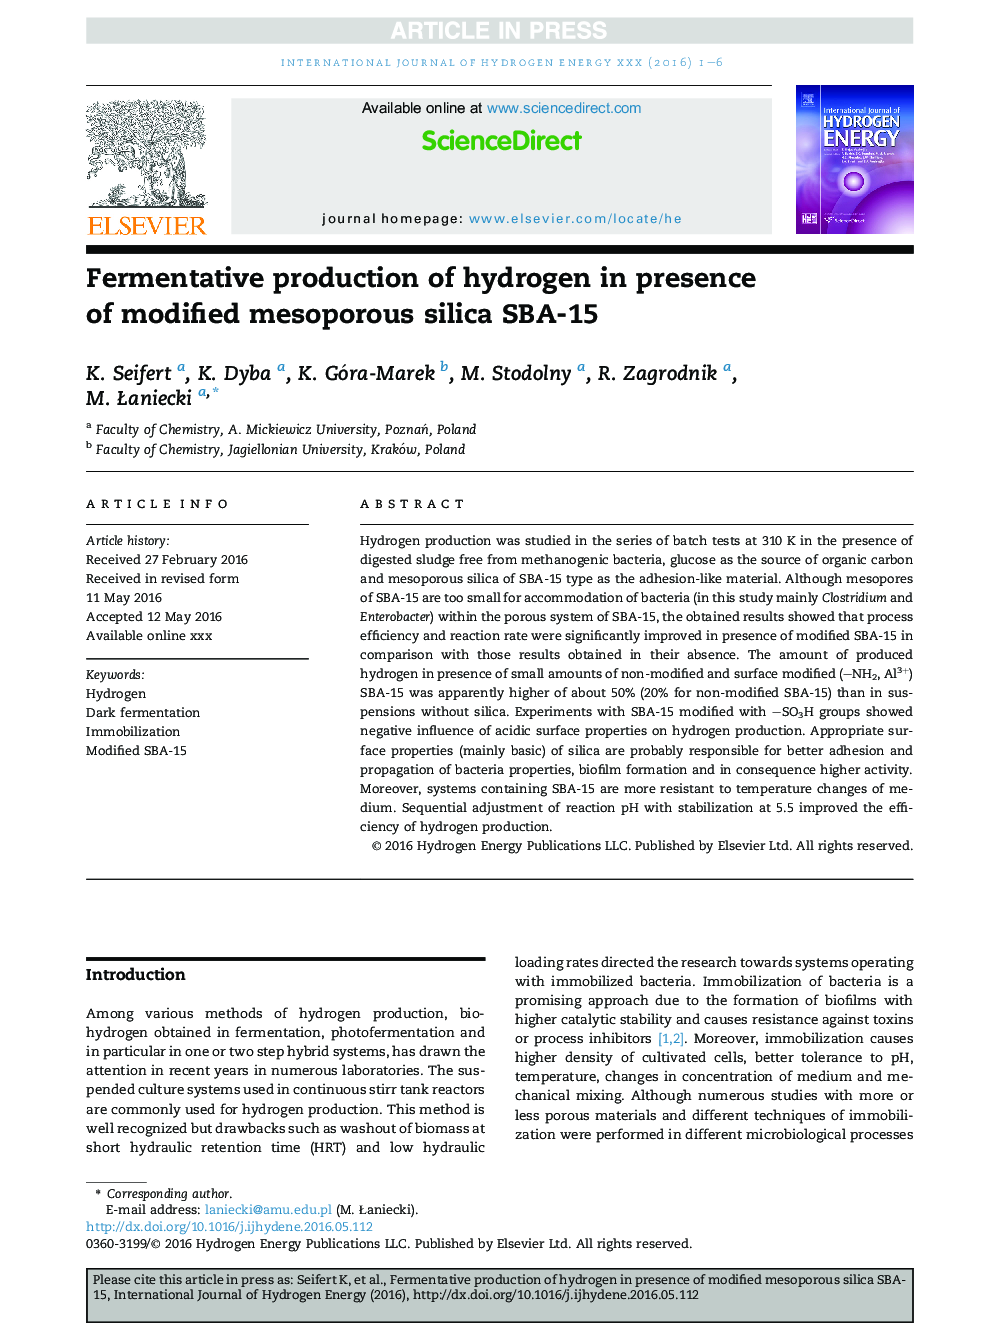 Fermentative production of hydrogen in presence of modified mesoporous silica SBA-15